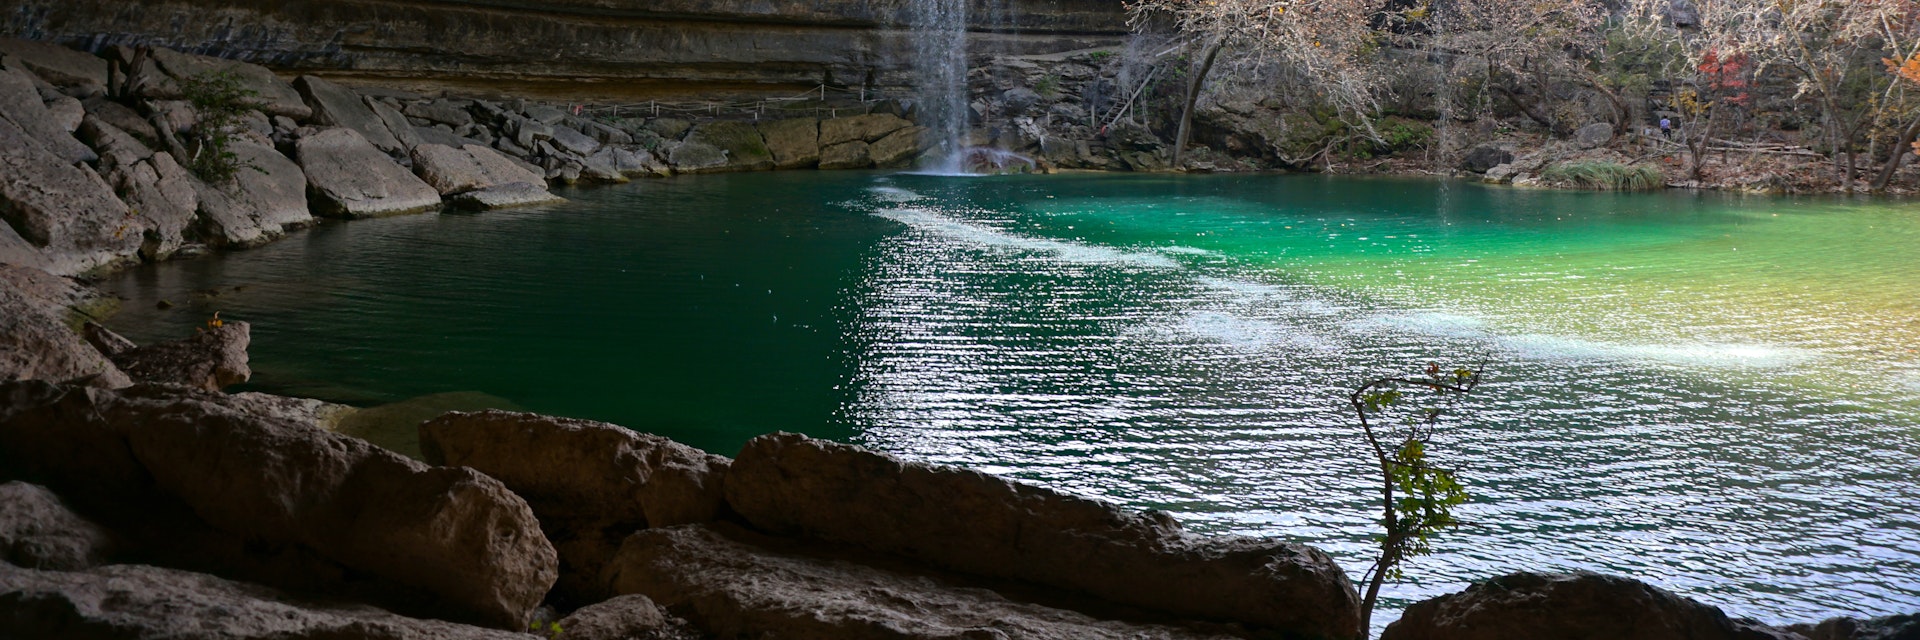 Waterfall in Hamilton Pool Preserve grotto.